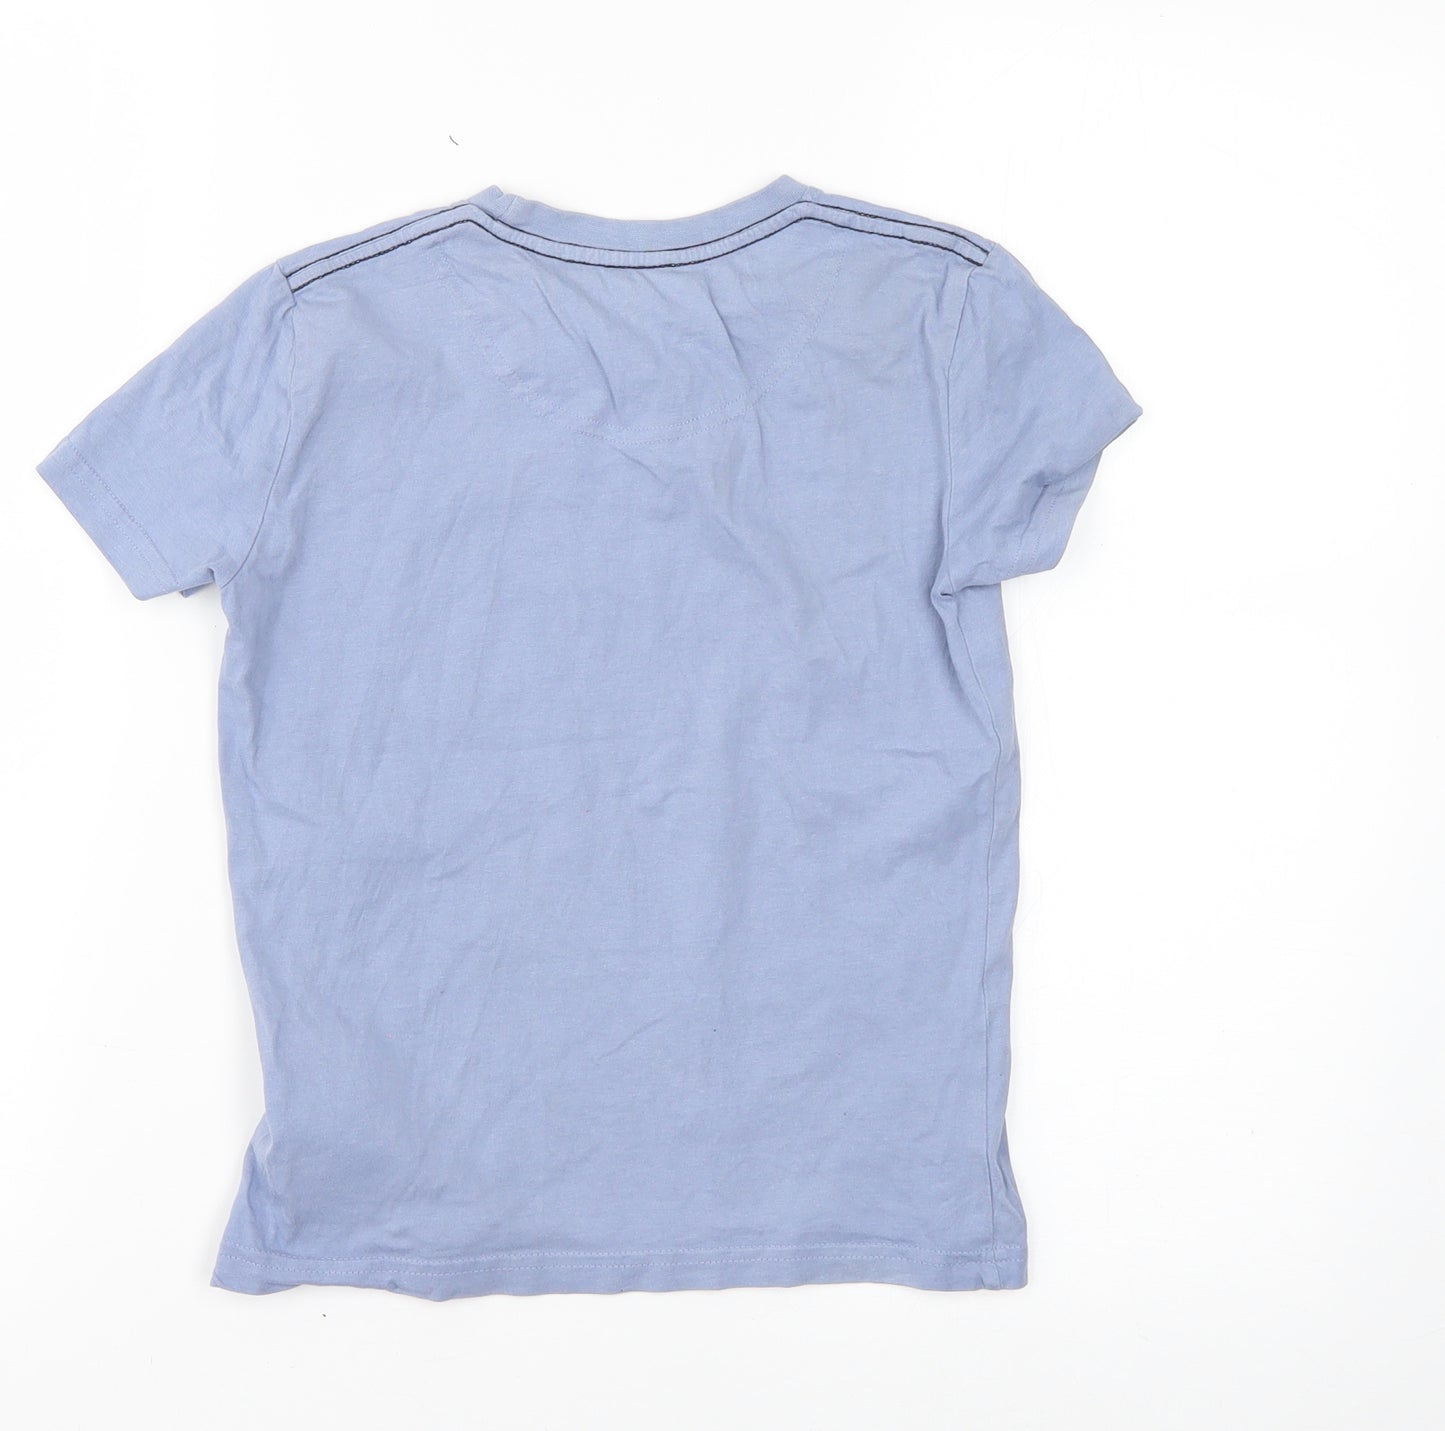 Henri Lloyd Boys Blue   Basic T-Shirt Size 8-9 Years